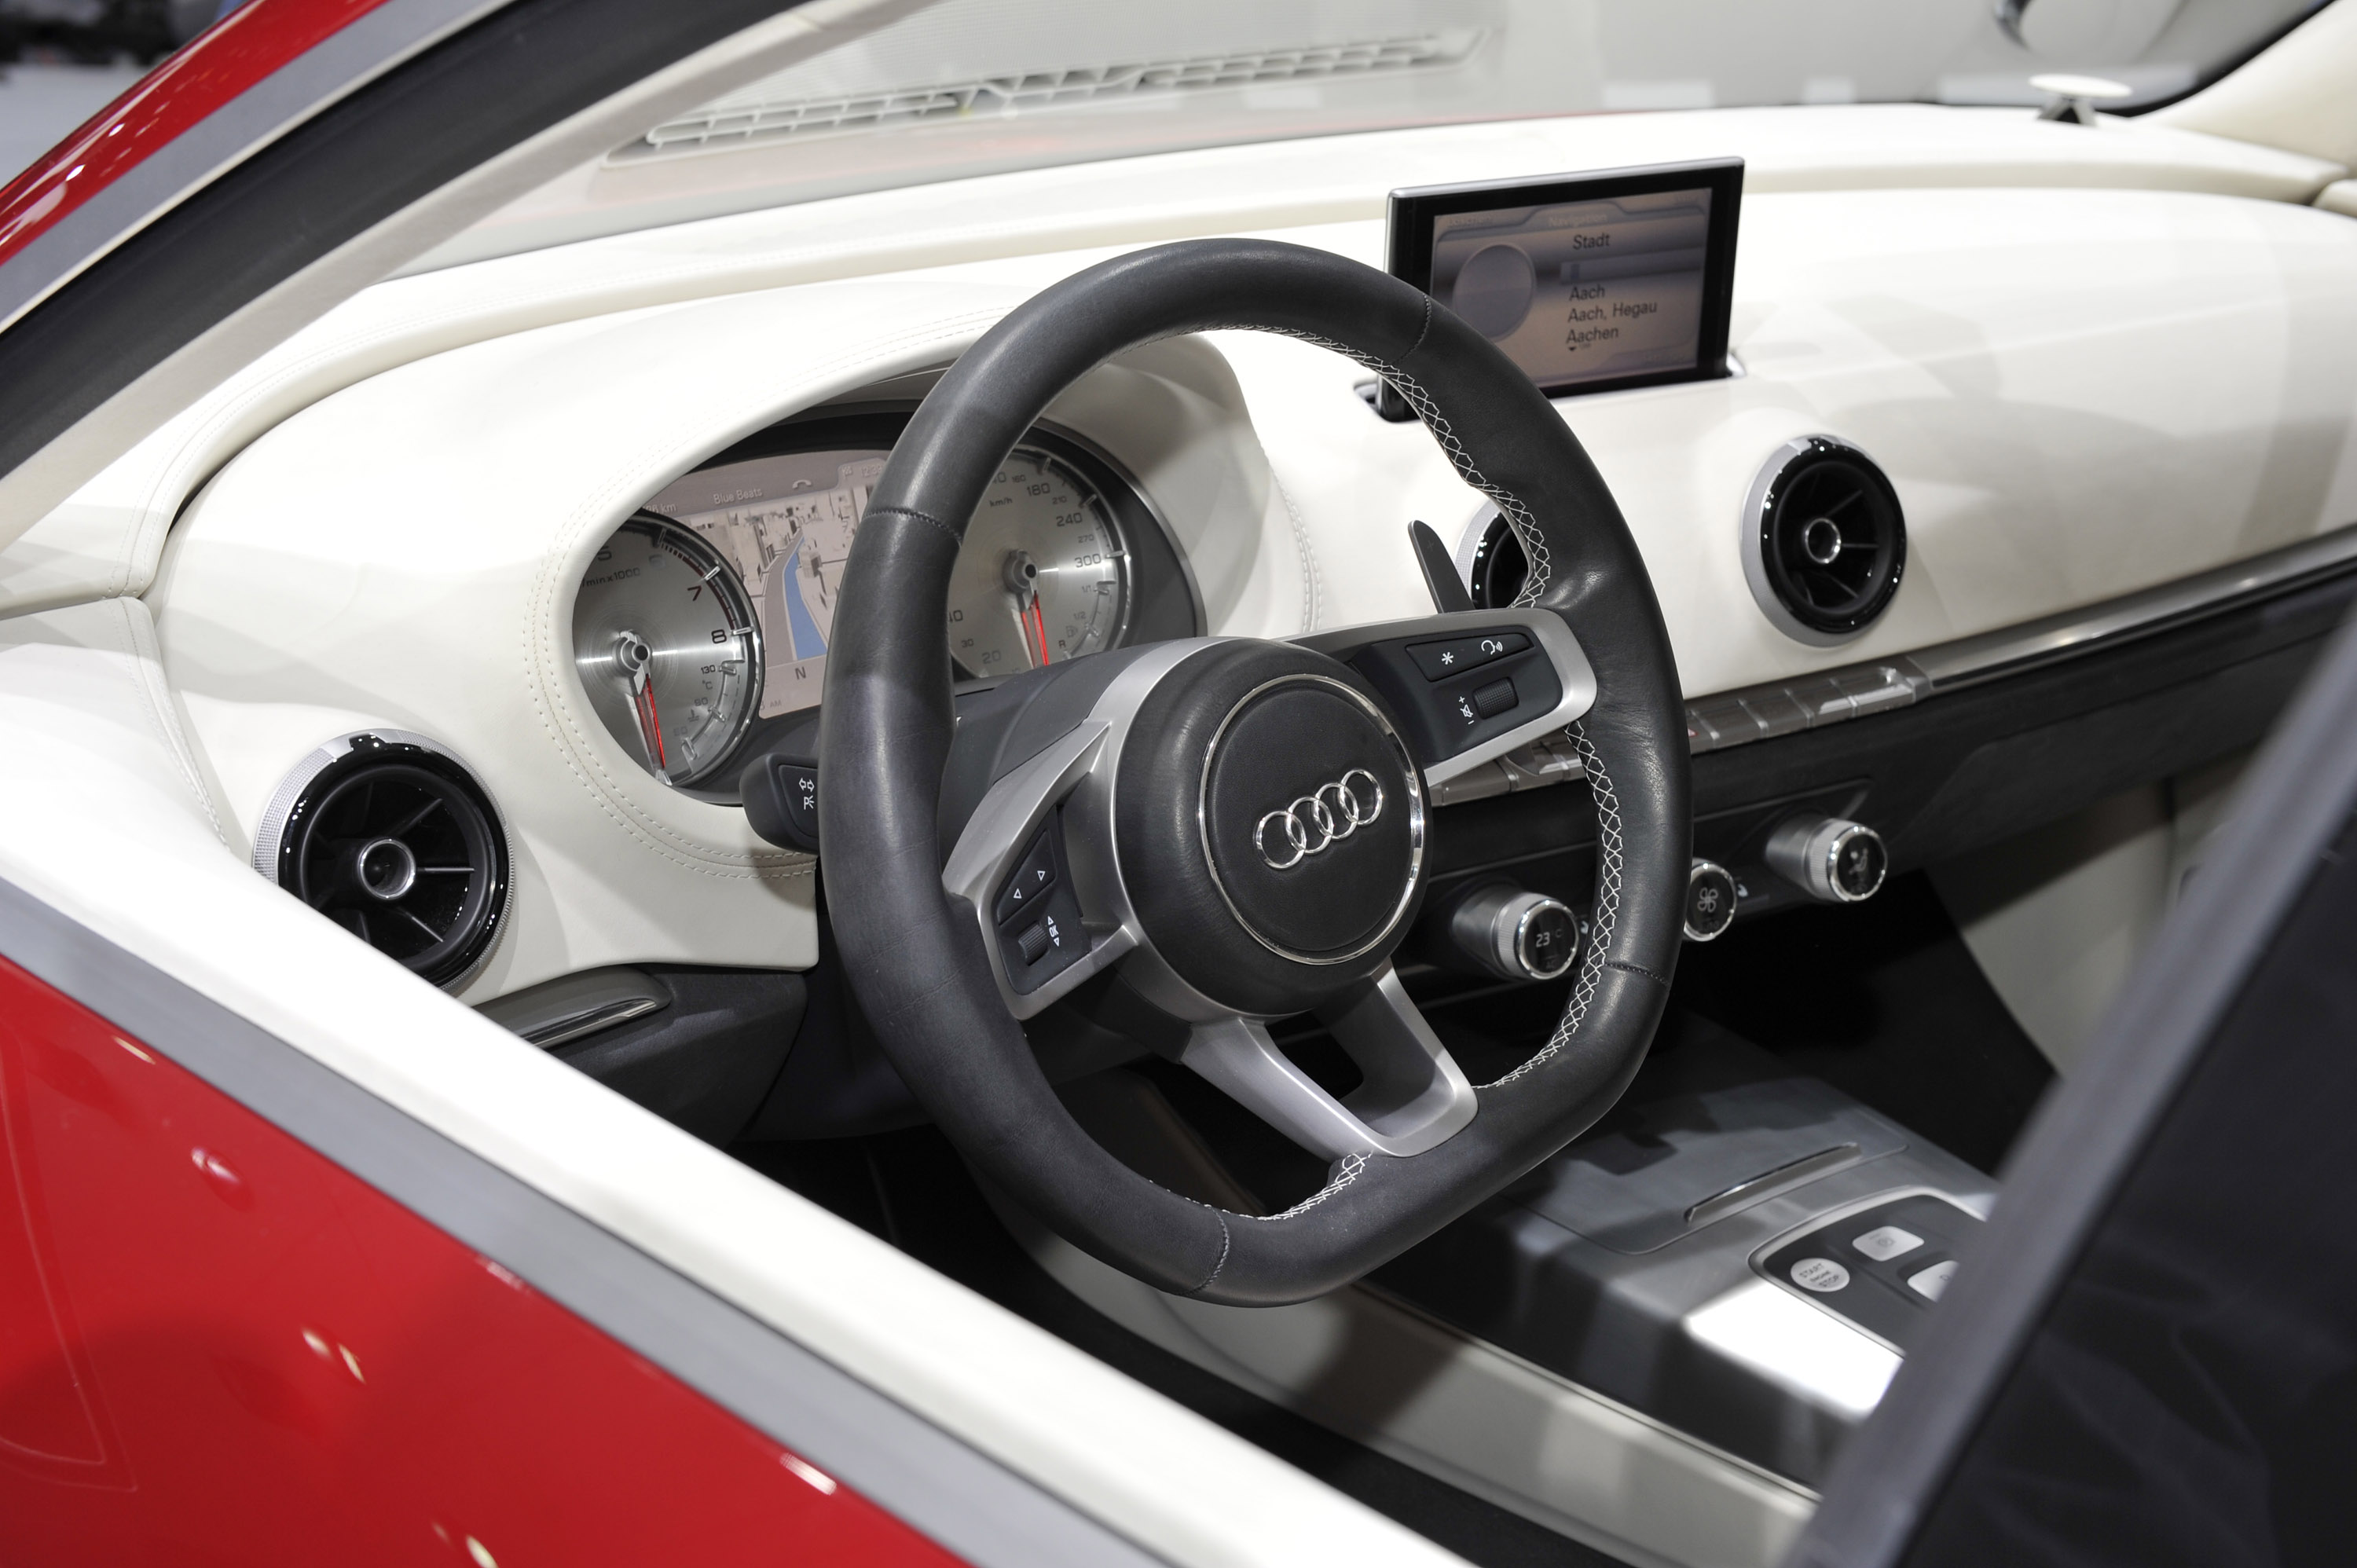 Audi A3 Concept Geneva